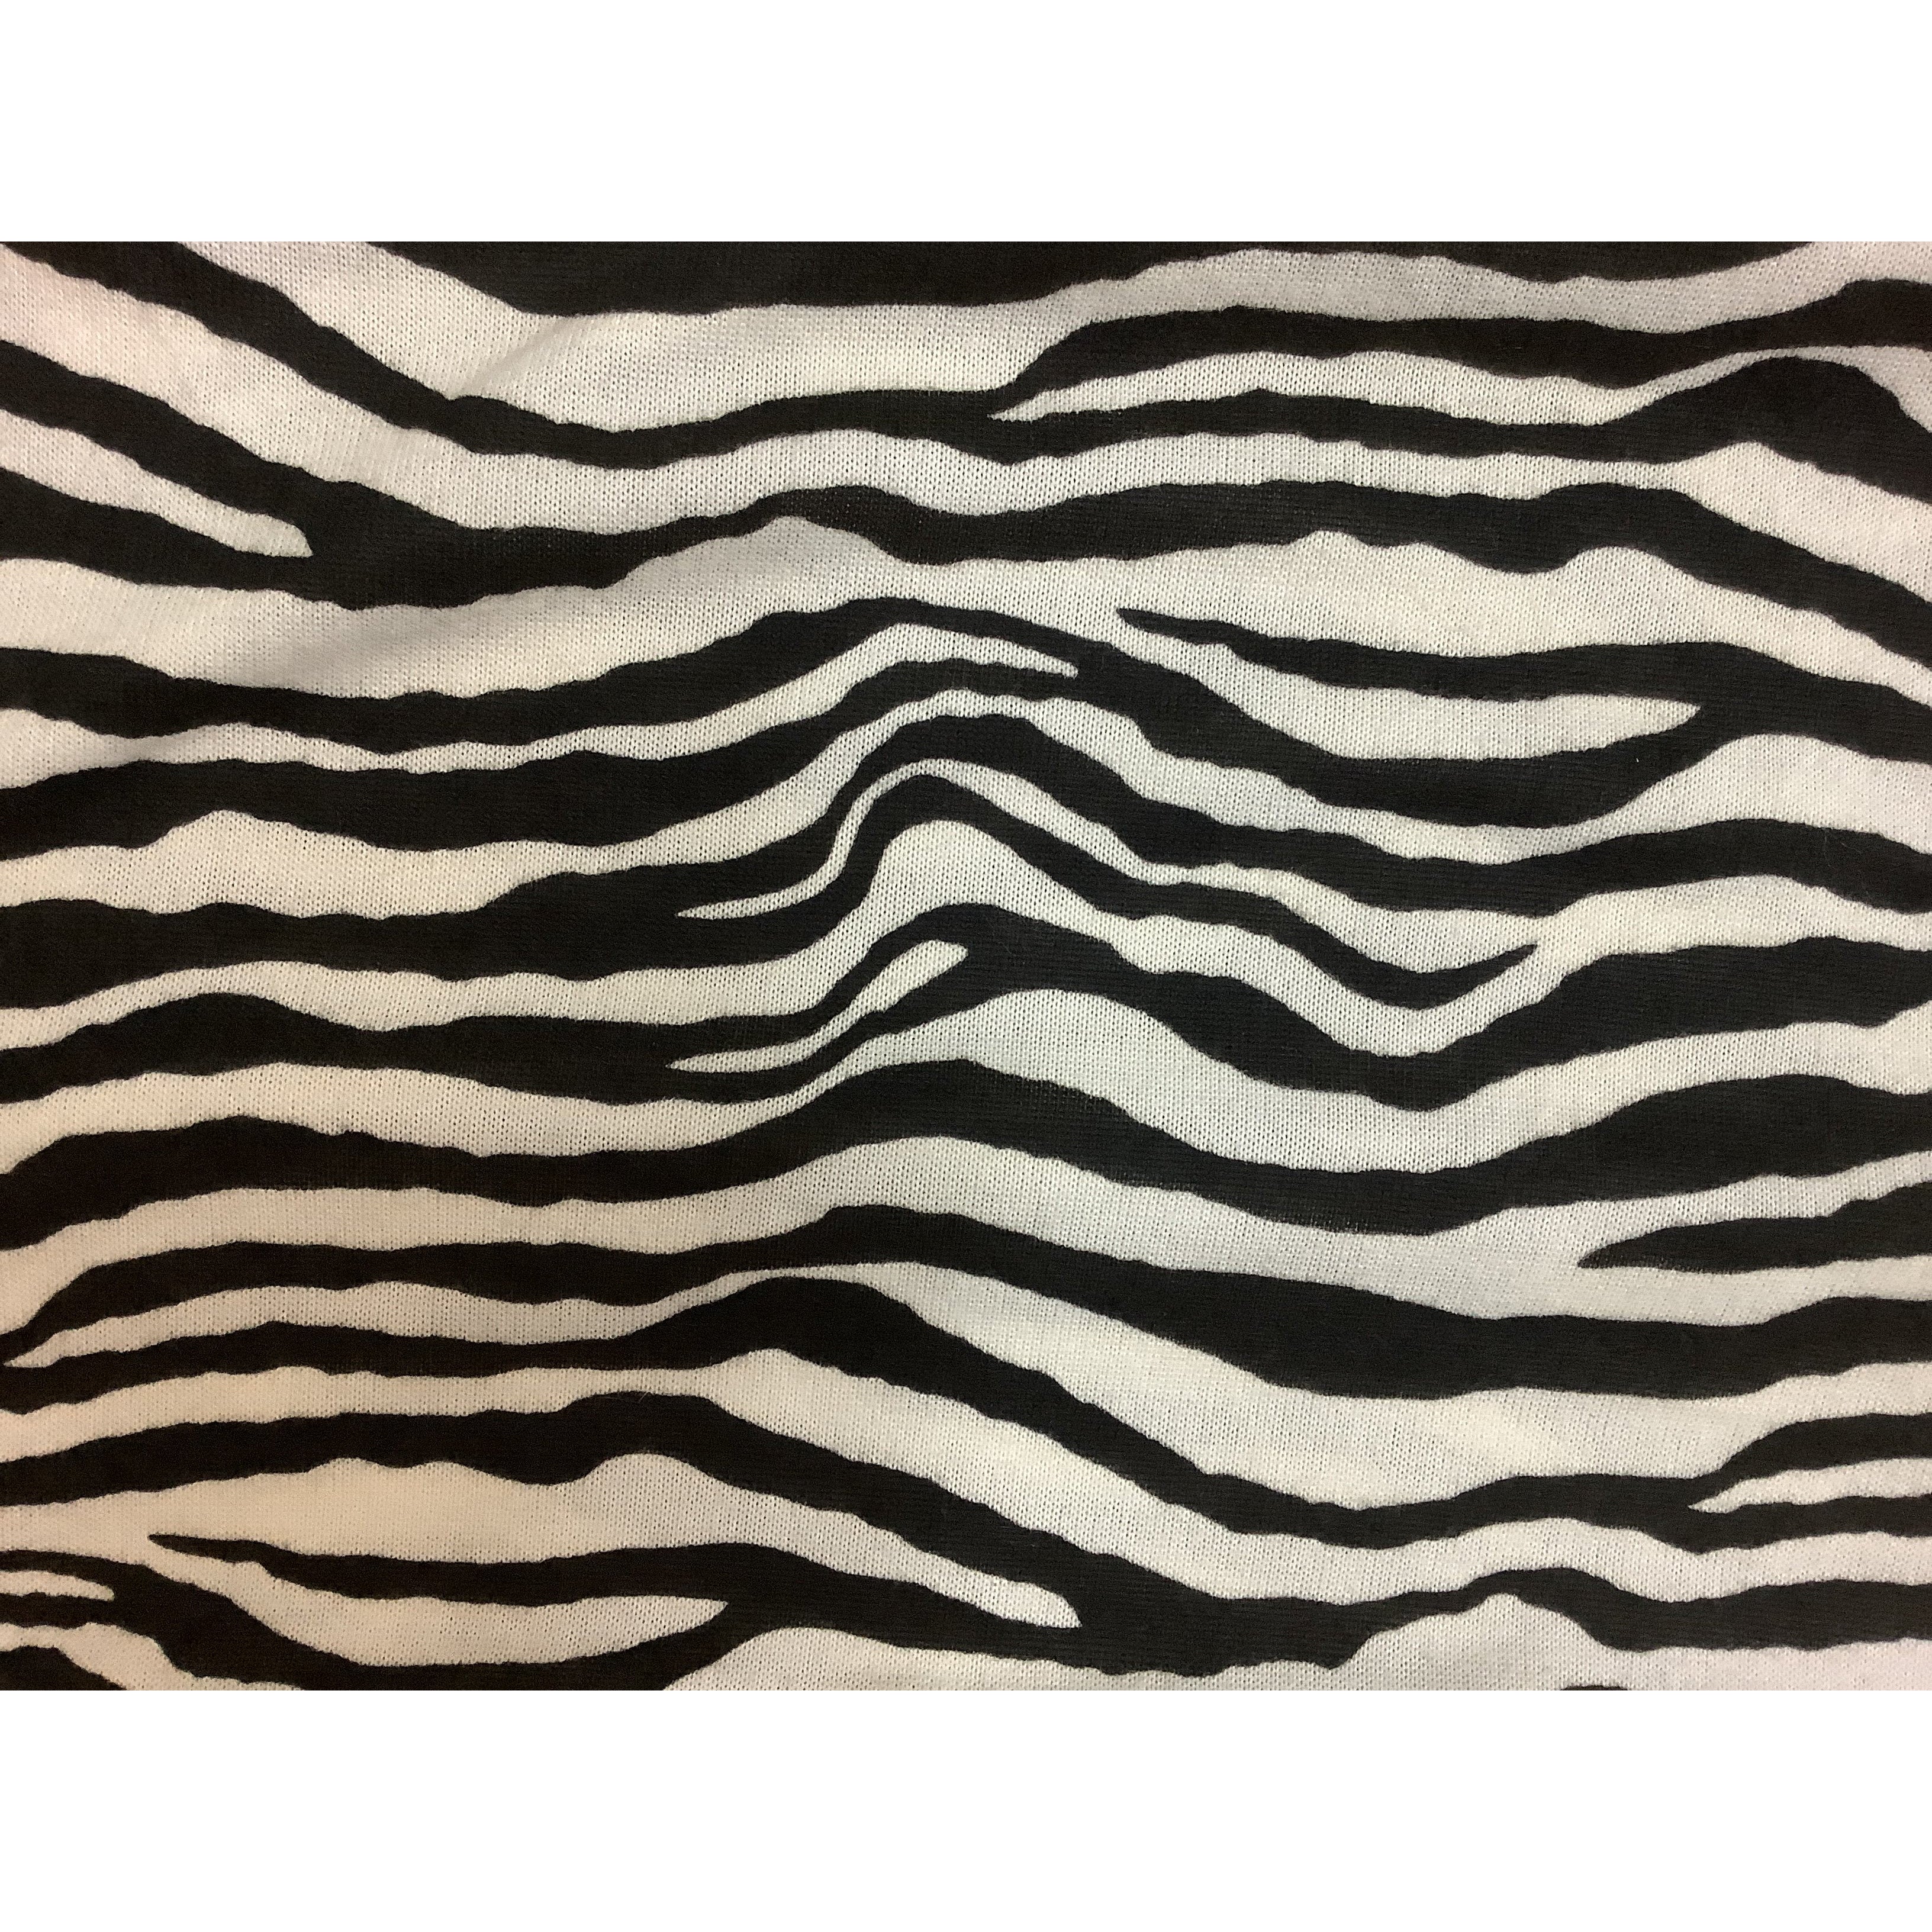 Women's Infinity Scarf: Zebra Pattern (no tags)